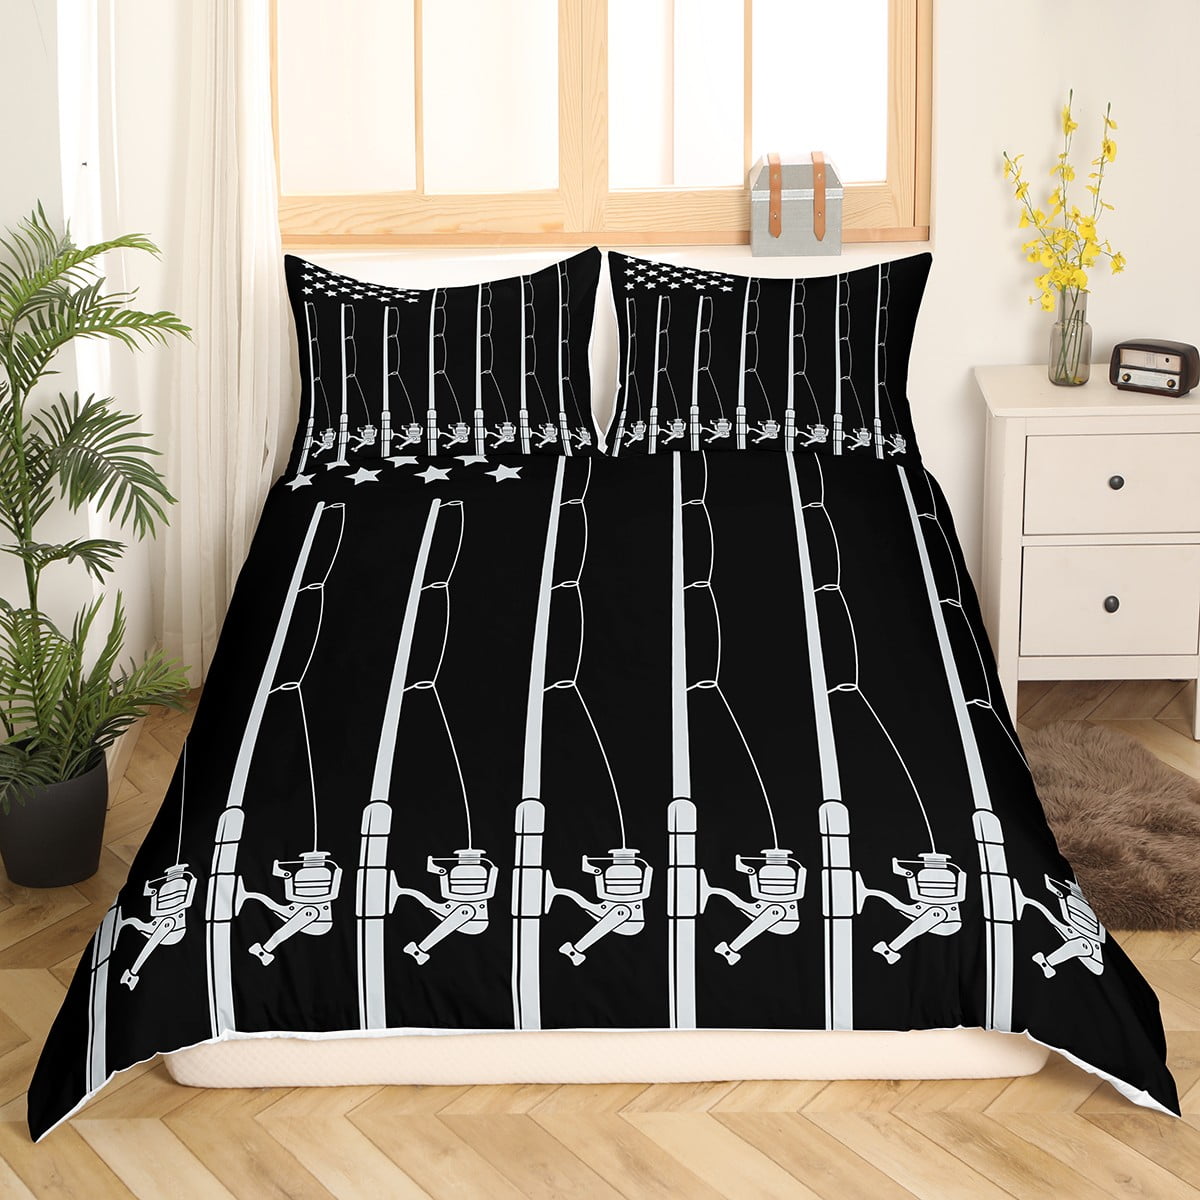 Buy Black Mickey Mouse Louis Vuitton Bedding Sets Bed Sets, Bedroom Sets,  Comforter Sets, Duvet Cover